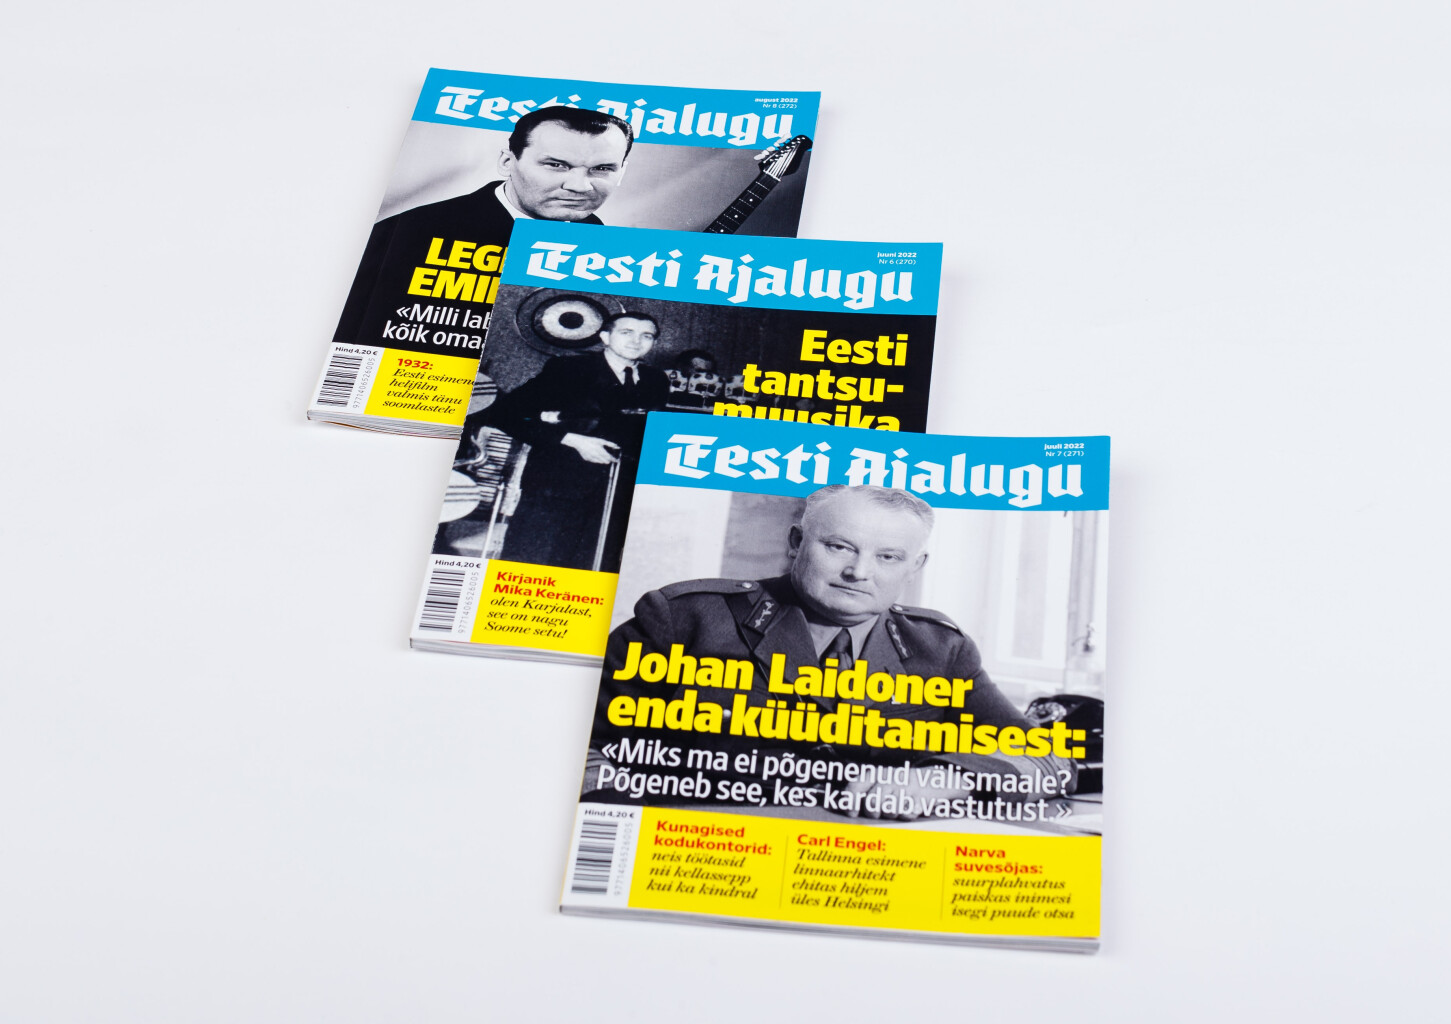 Подписка на журнал Eesti Ajalugu (12 месяцев)